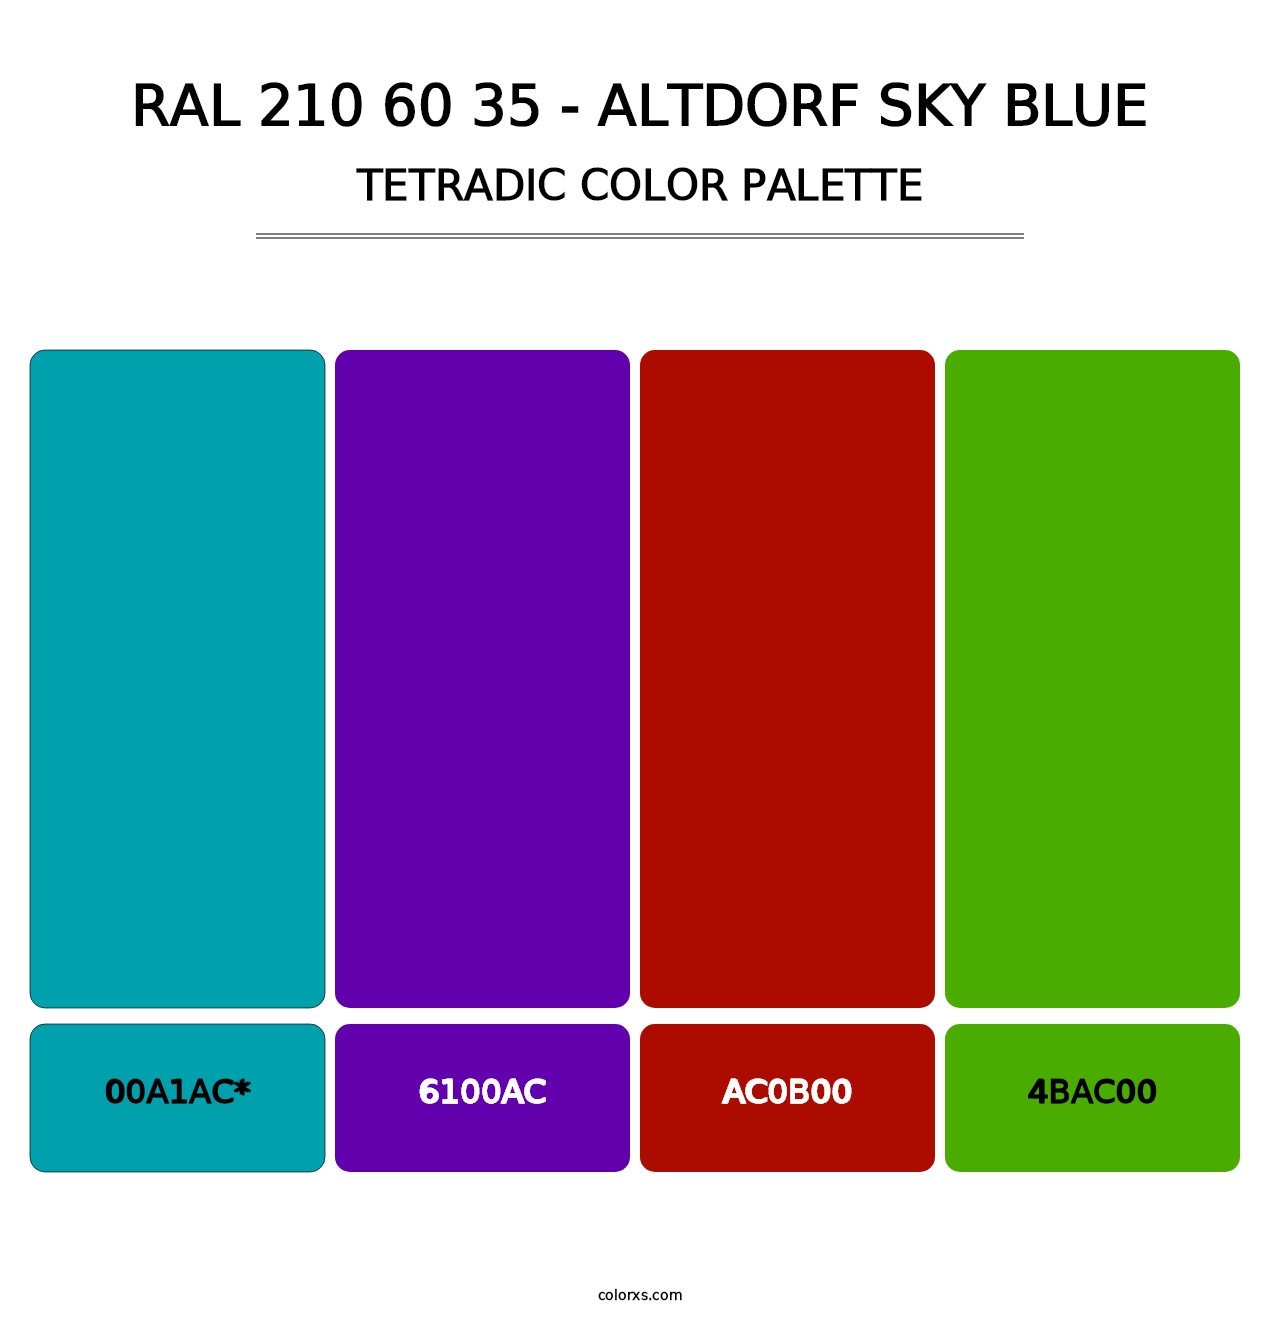 RAL 210 60 35 - Altdorf Sky Blue - Tetradic Color Palette